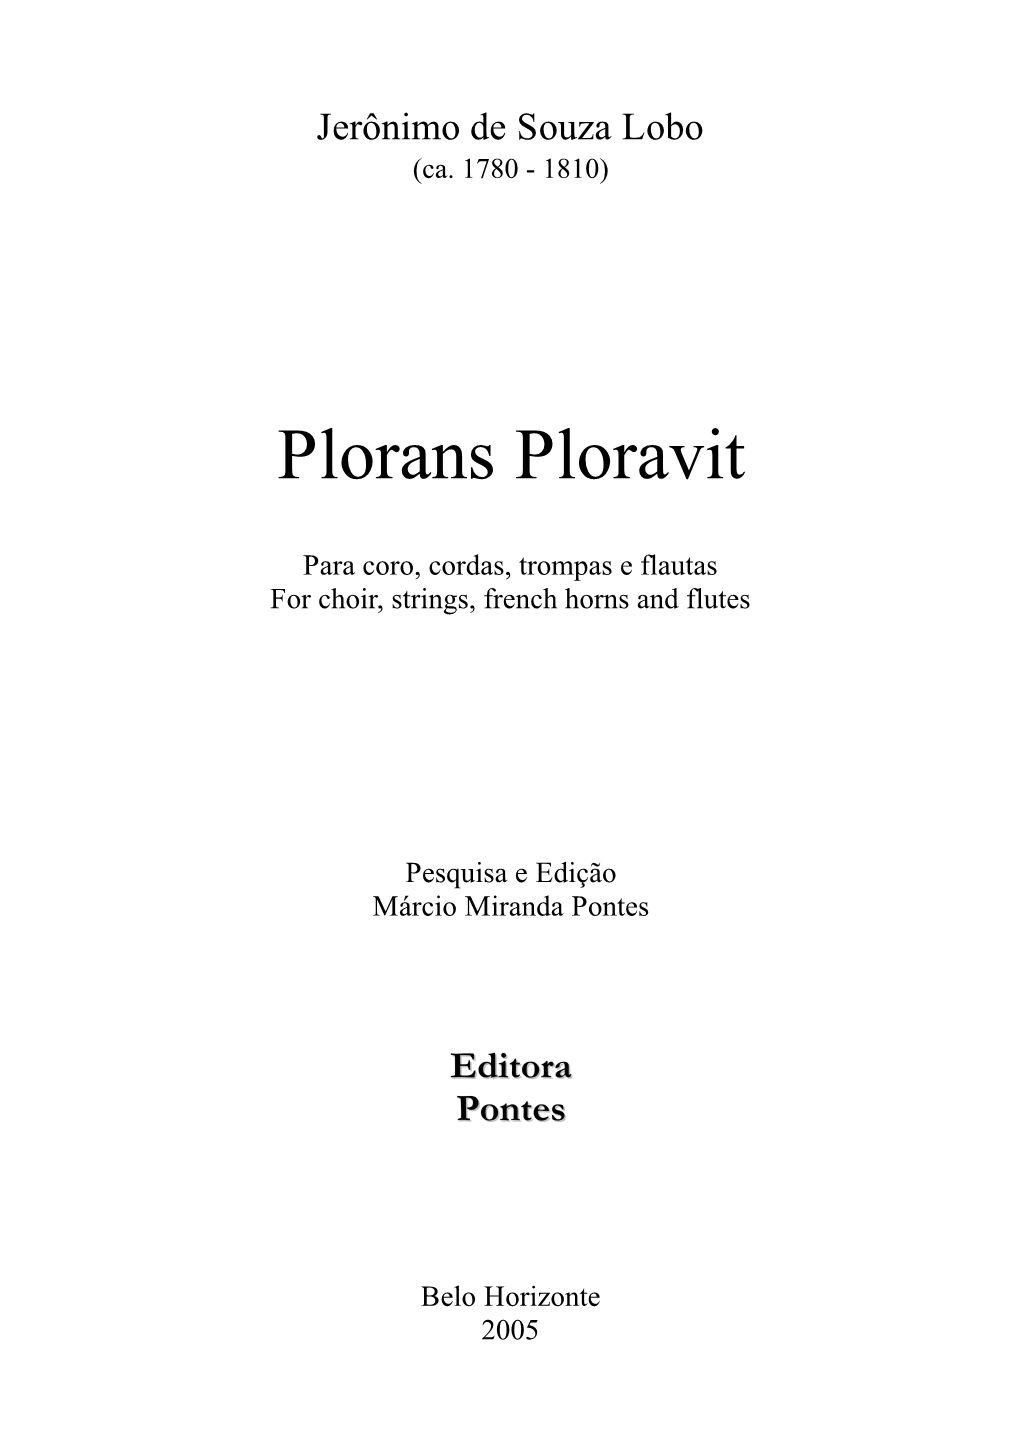 Plorans Ploravit